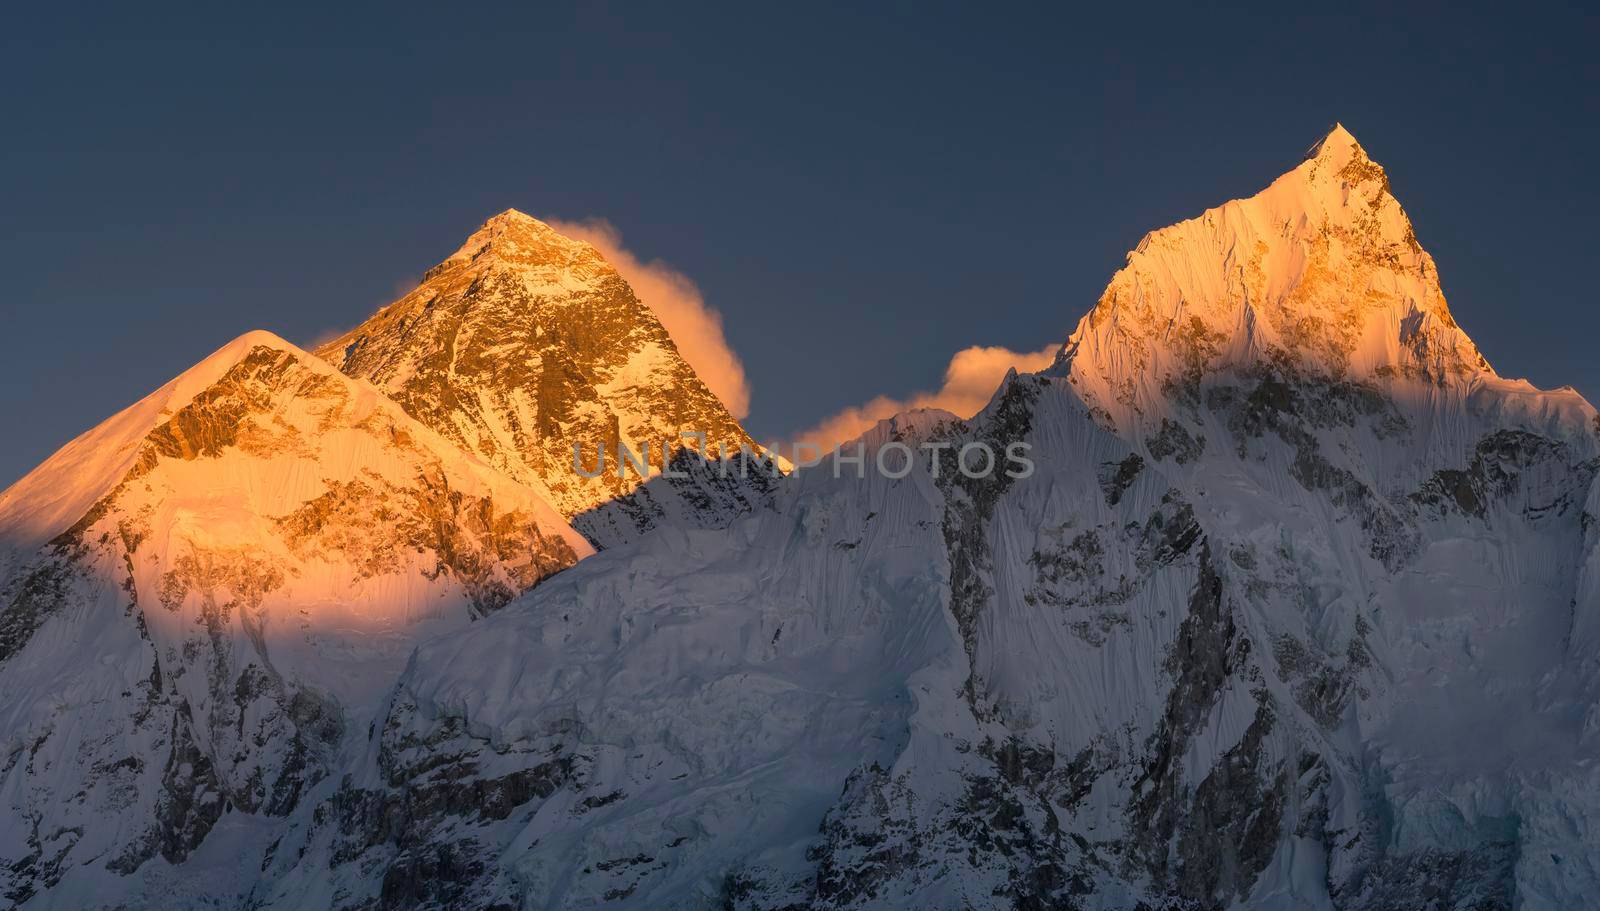 Everest and Nuptse summits at sunset or sunrise by Arsgera